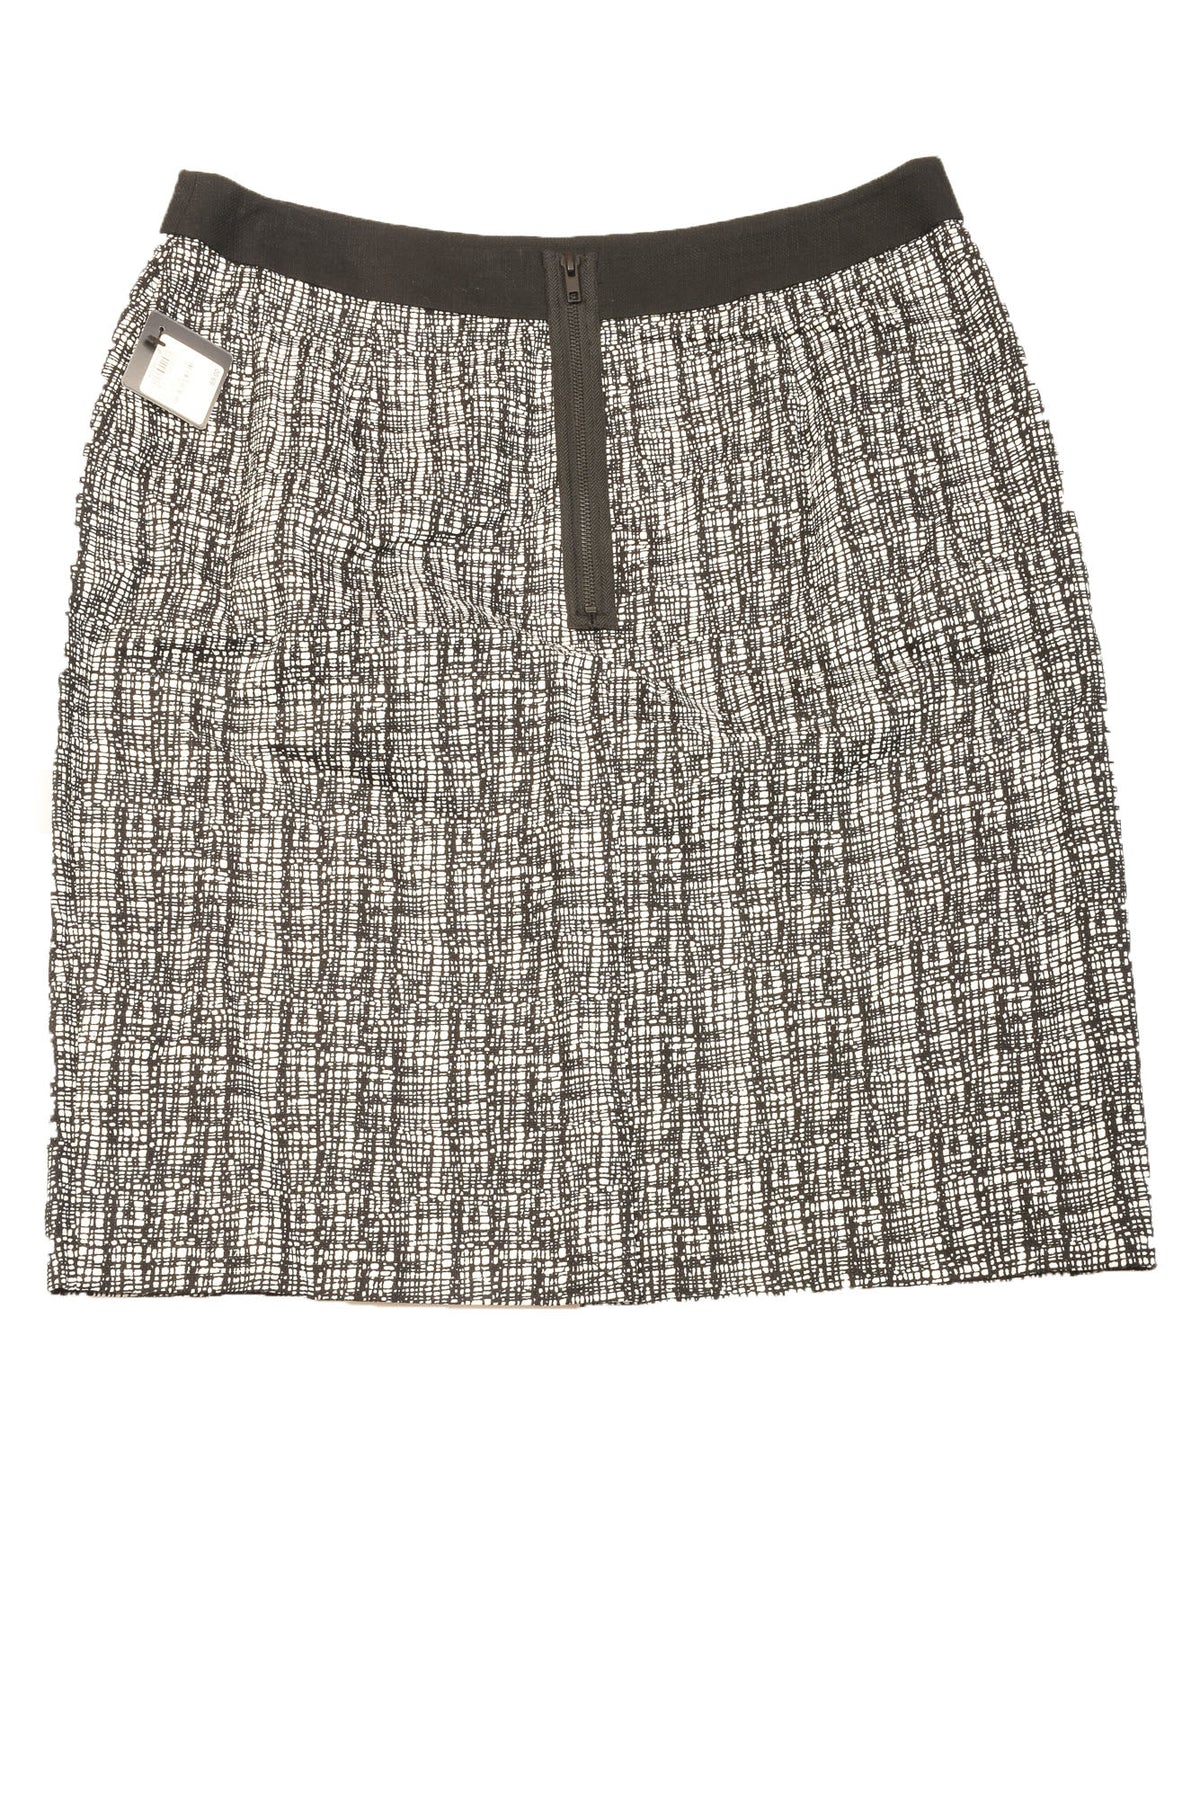 Halogen Size 16 Women&#39;s Plus Skirt